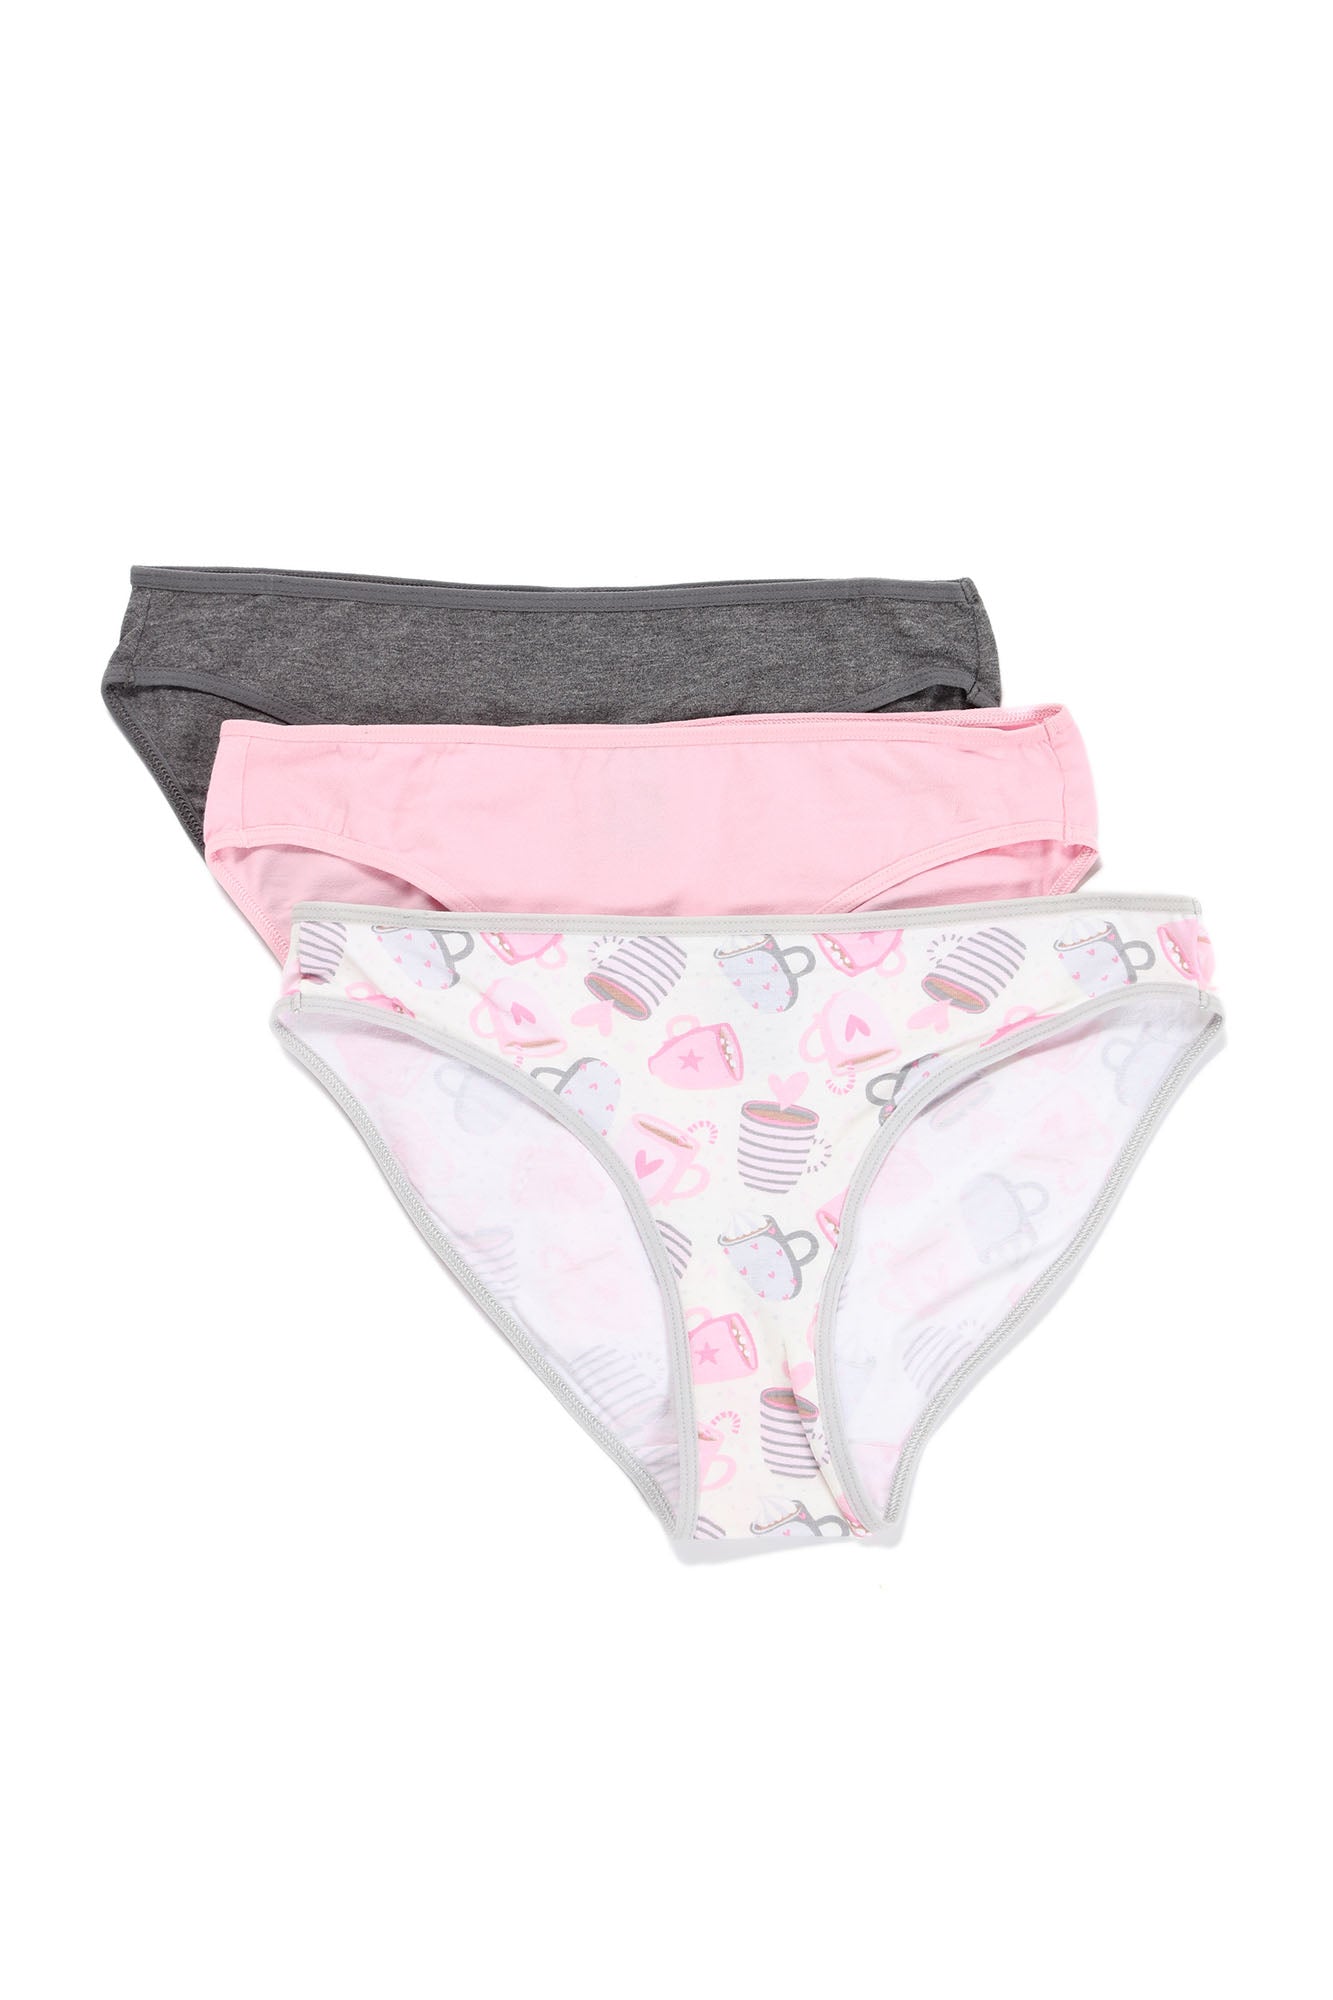 Perfect Fit Cotton Bikini 3 Pack Panties - White/Pink, Fashion Nova,  Lingerie & Sleepwear